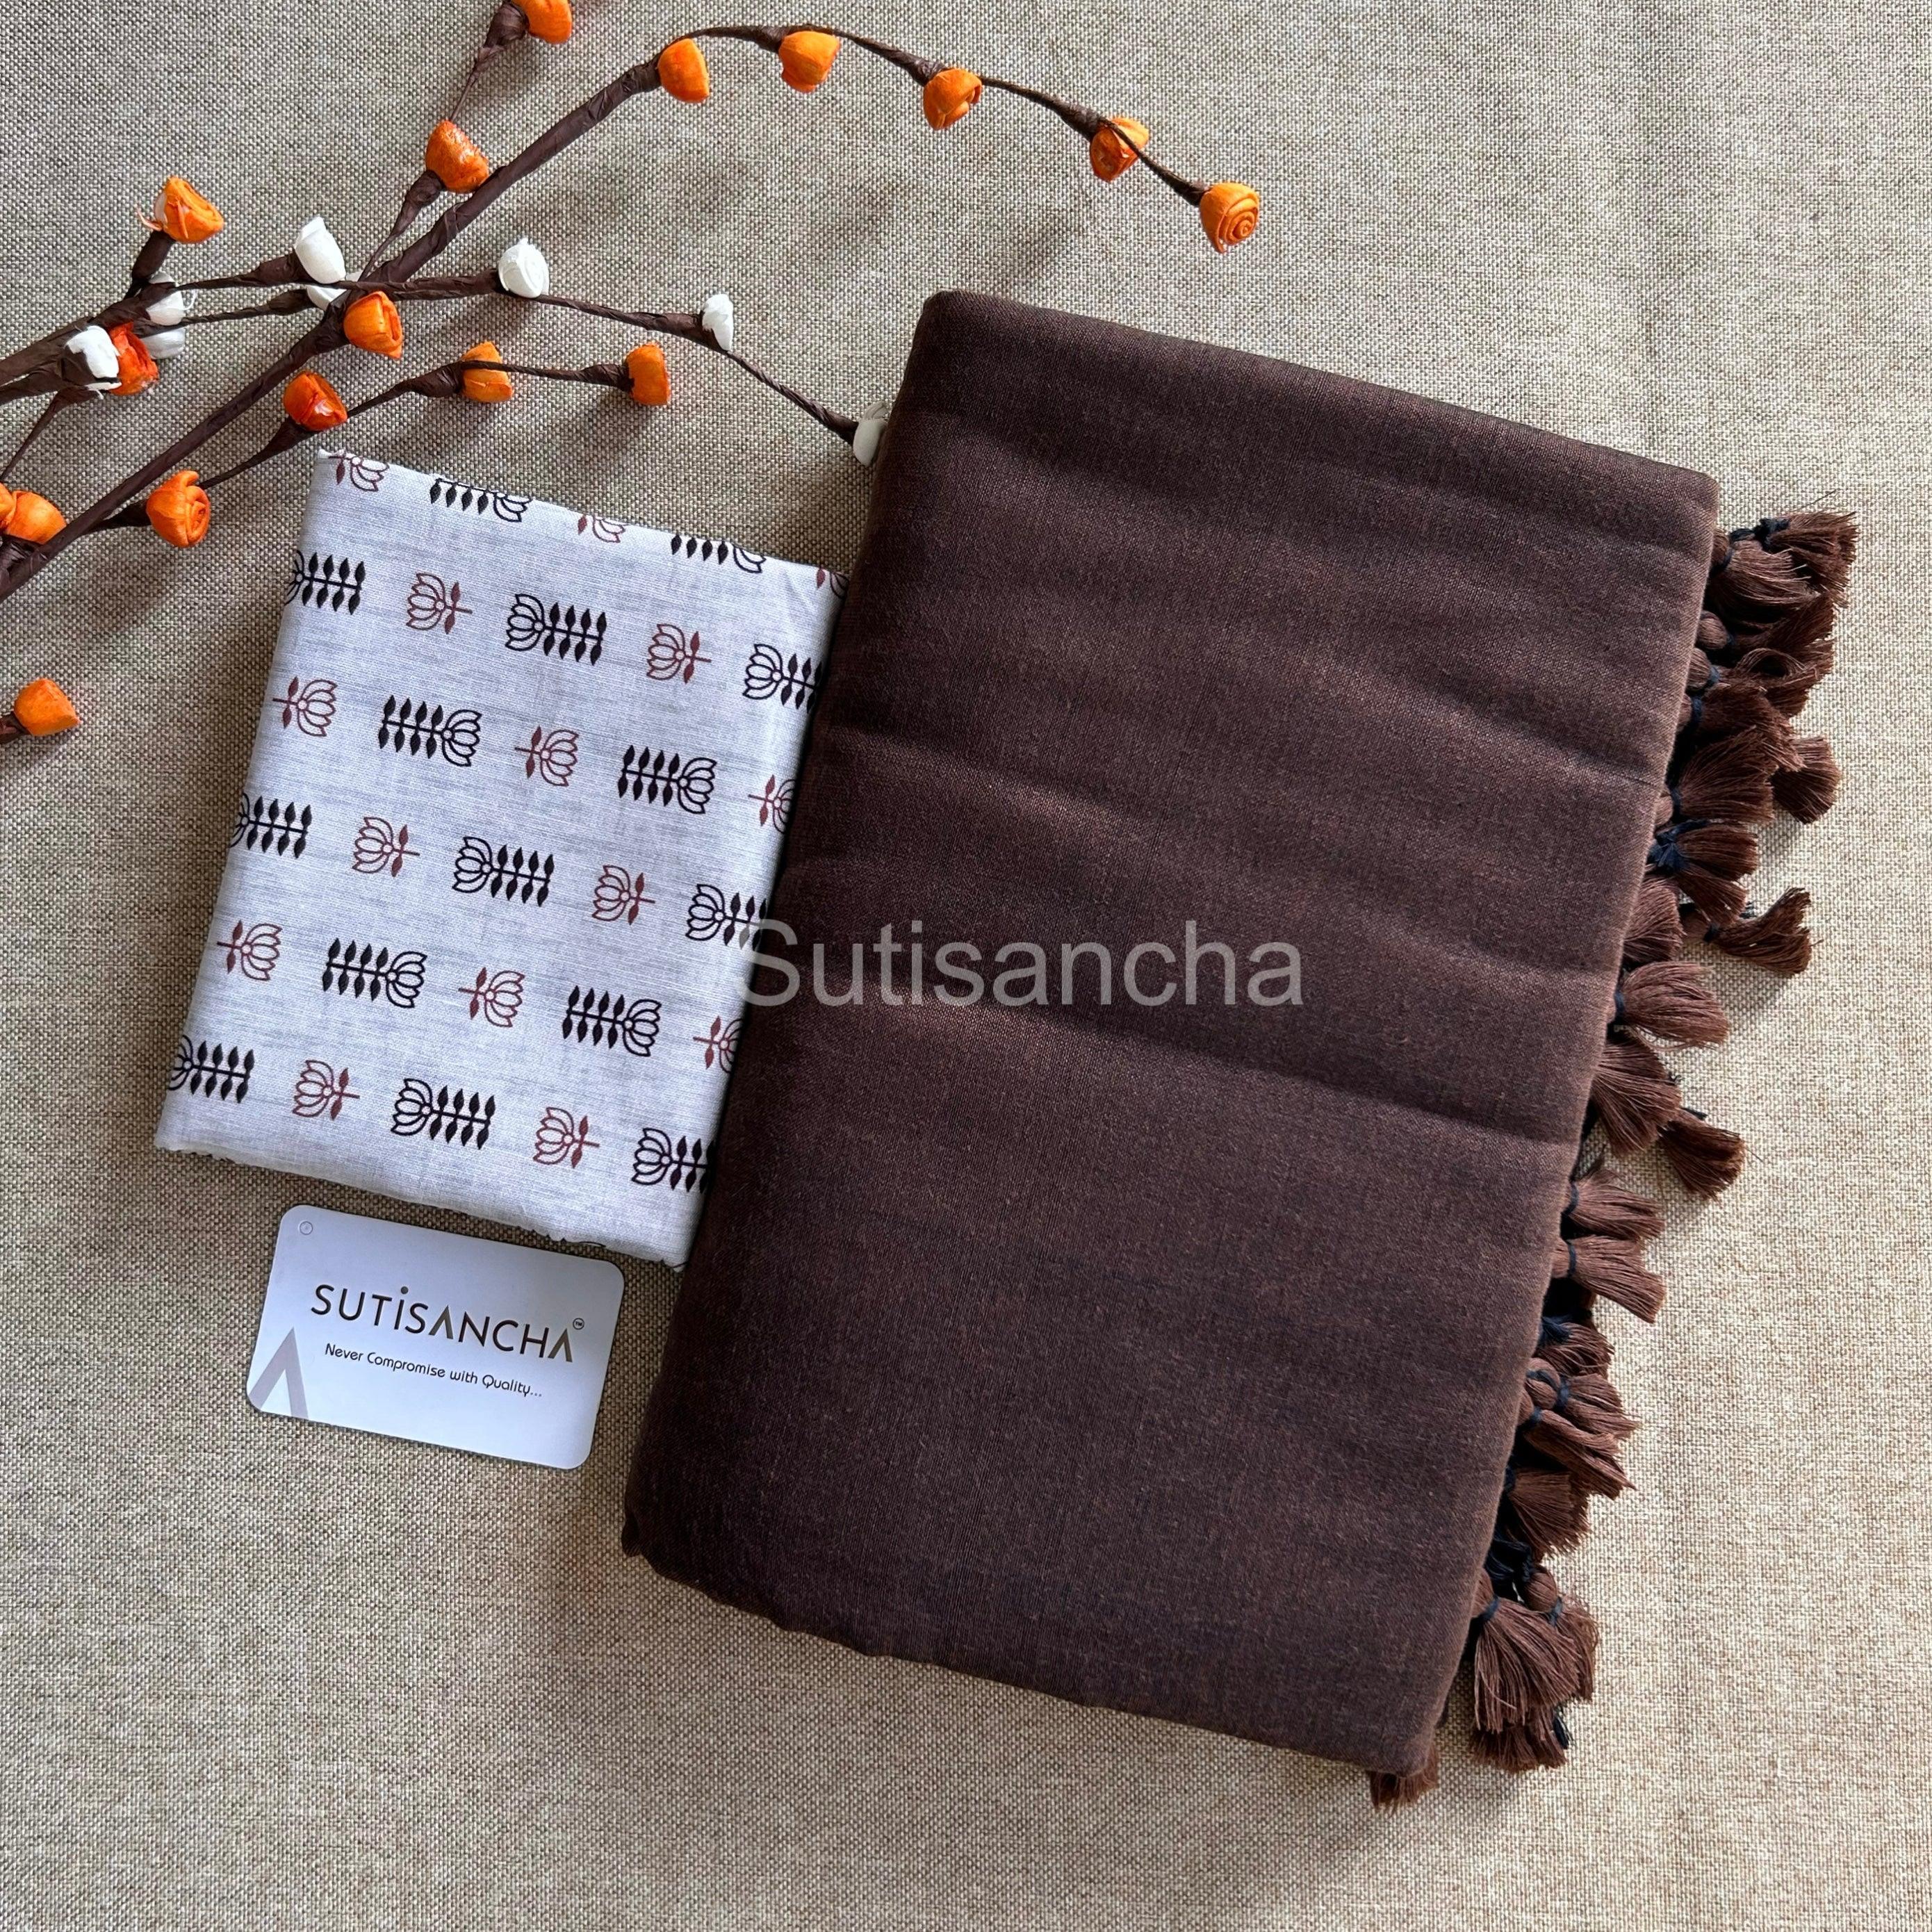 Sutisancha Brown Khadi Saree & Cotton Design Blouse - Suti Sancha